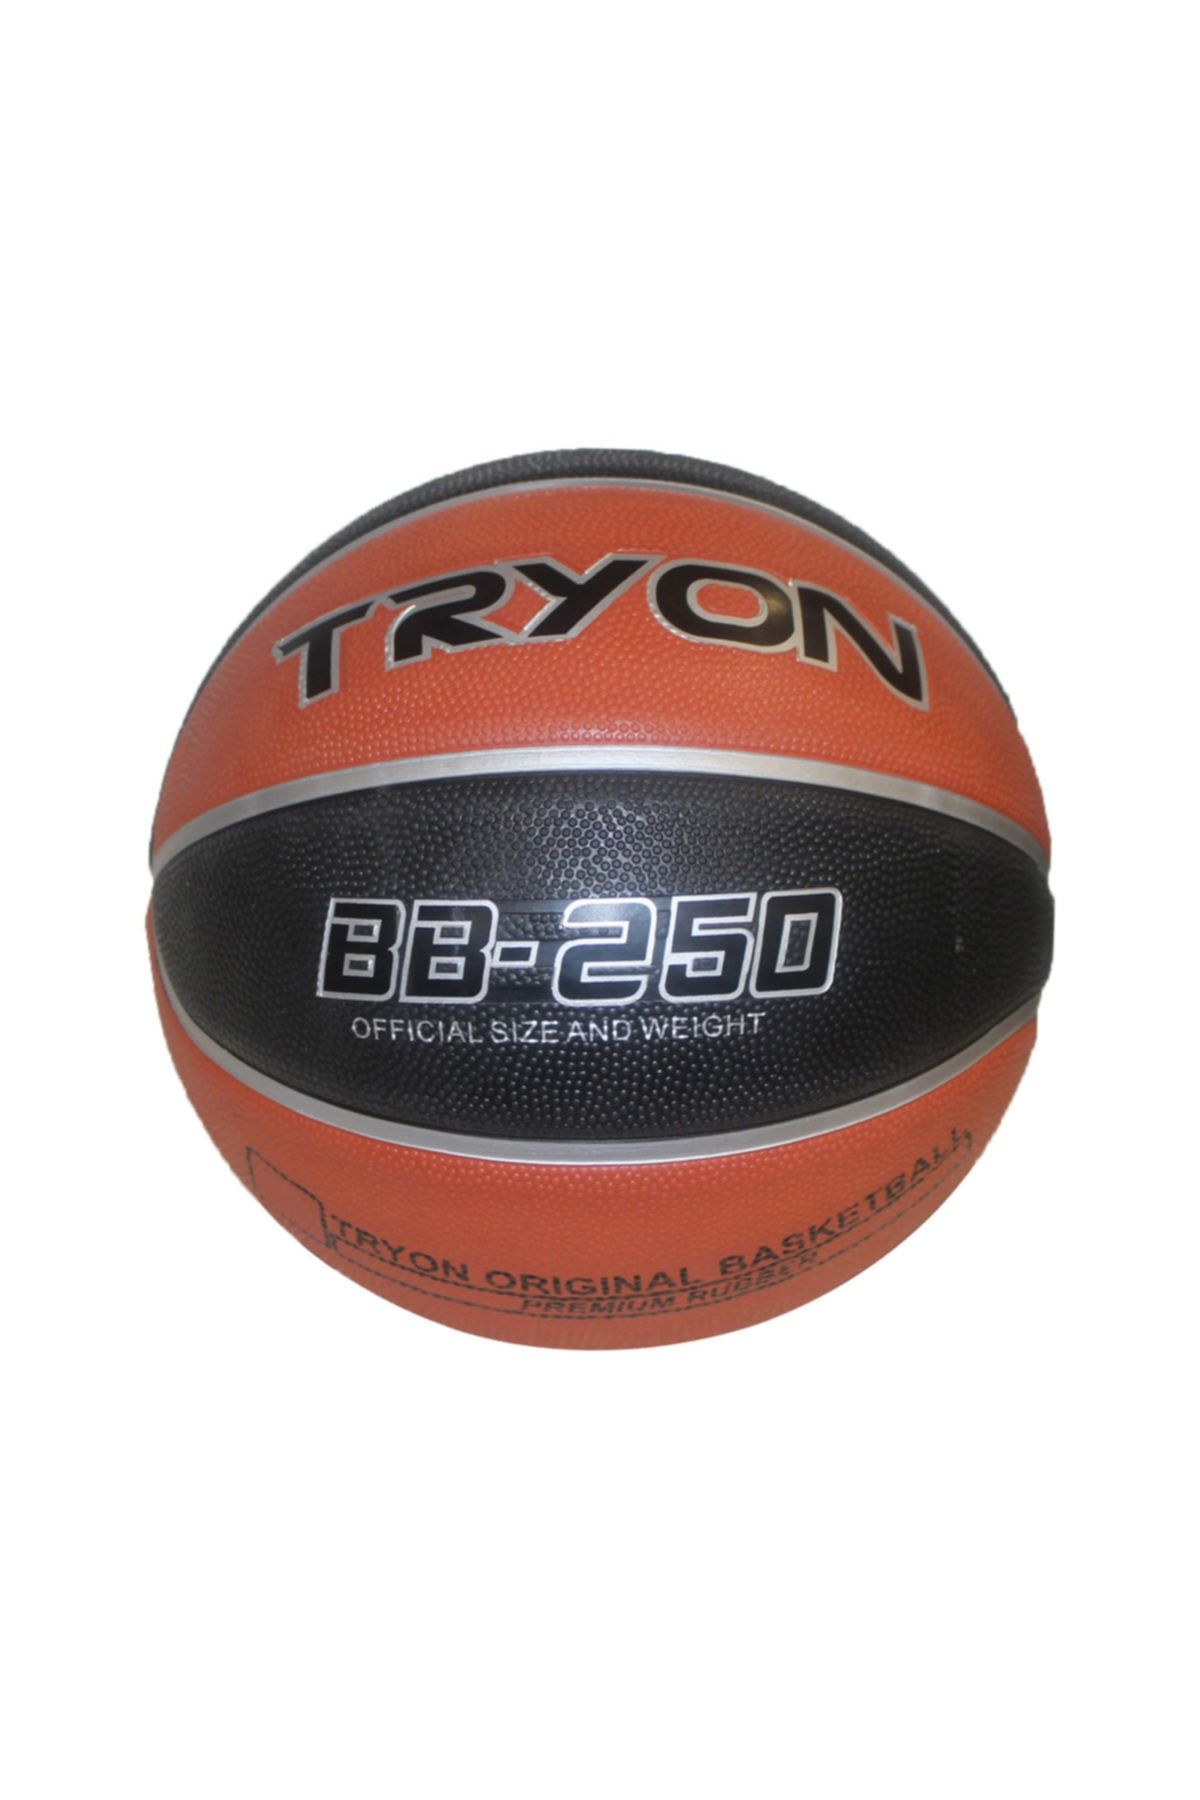 TRYON Unisex Top  -  Bb-250   - BB-250-S